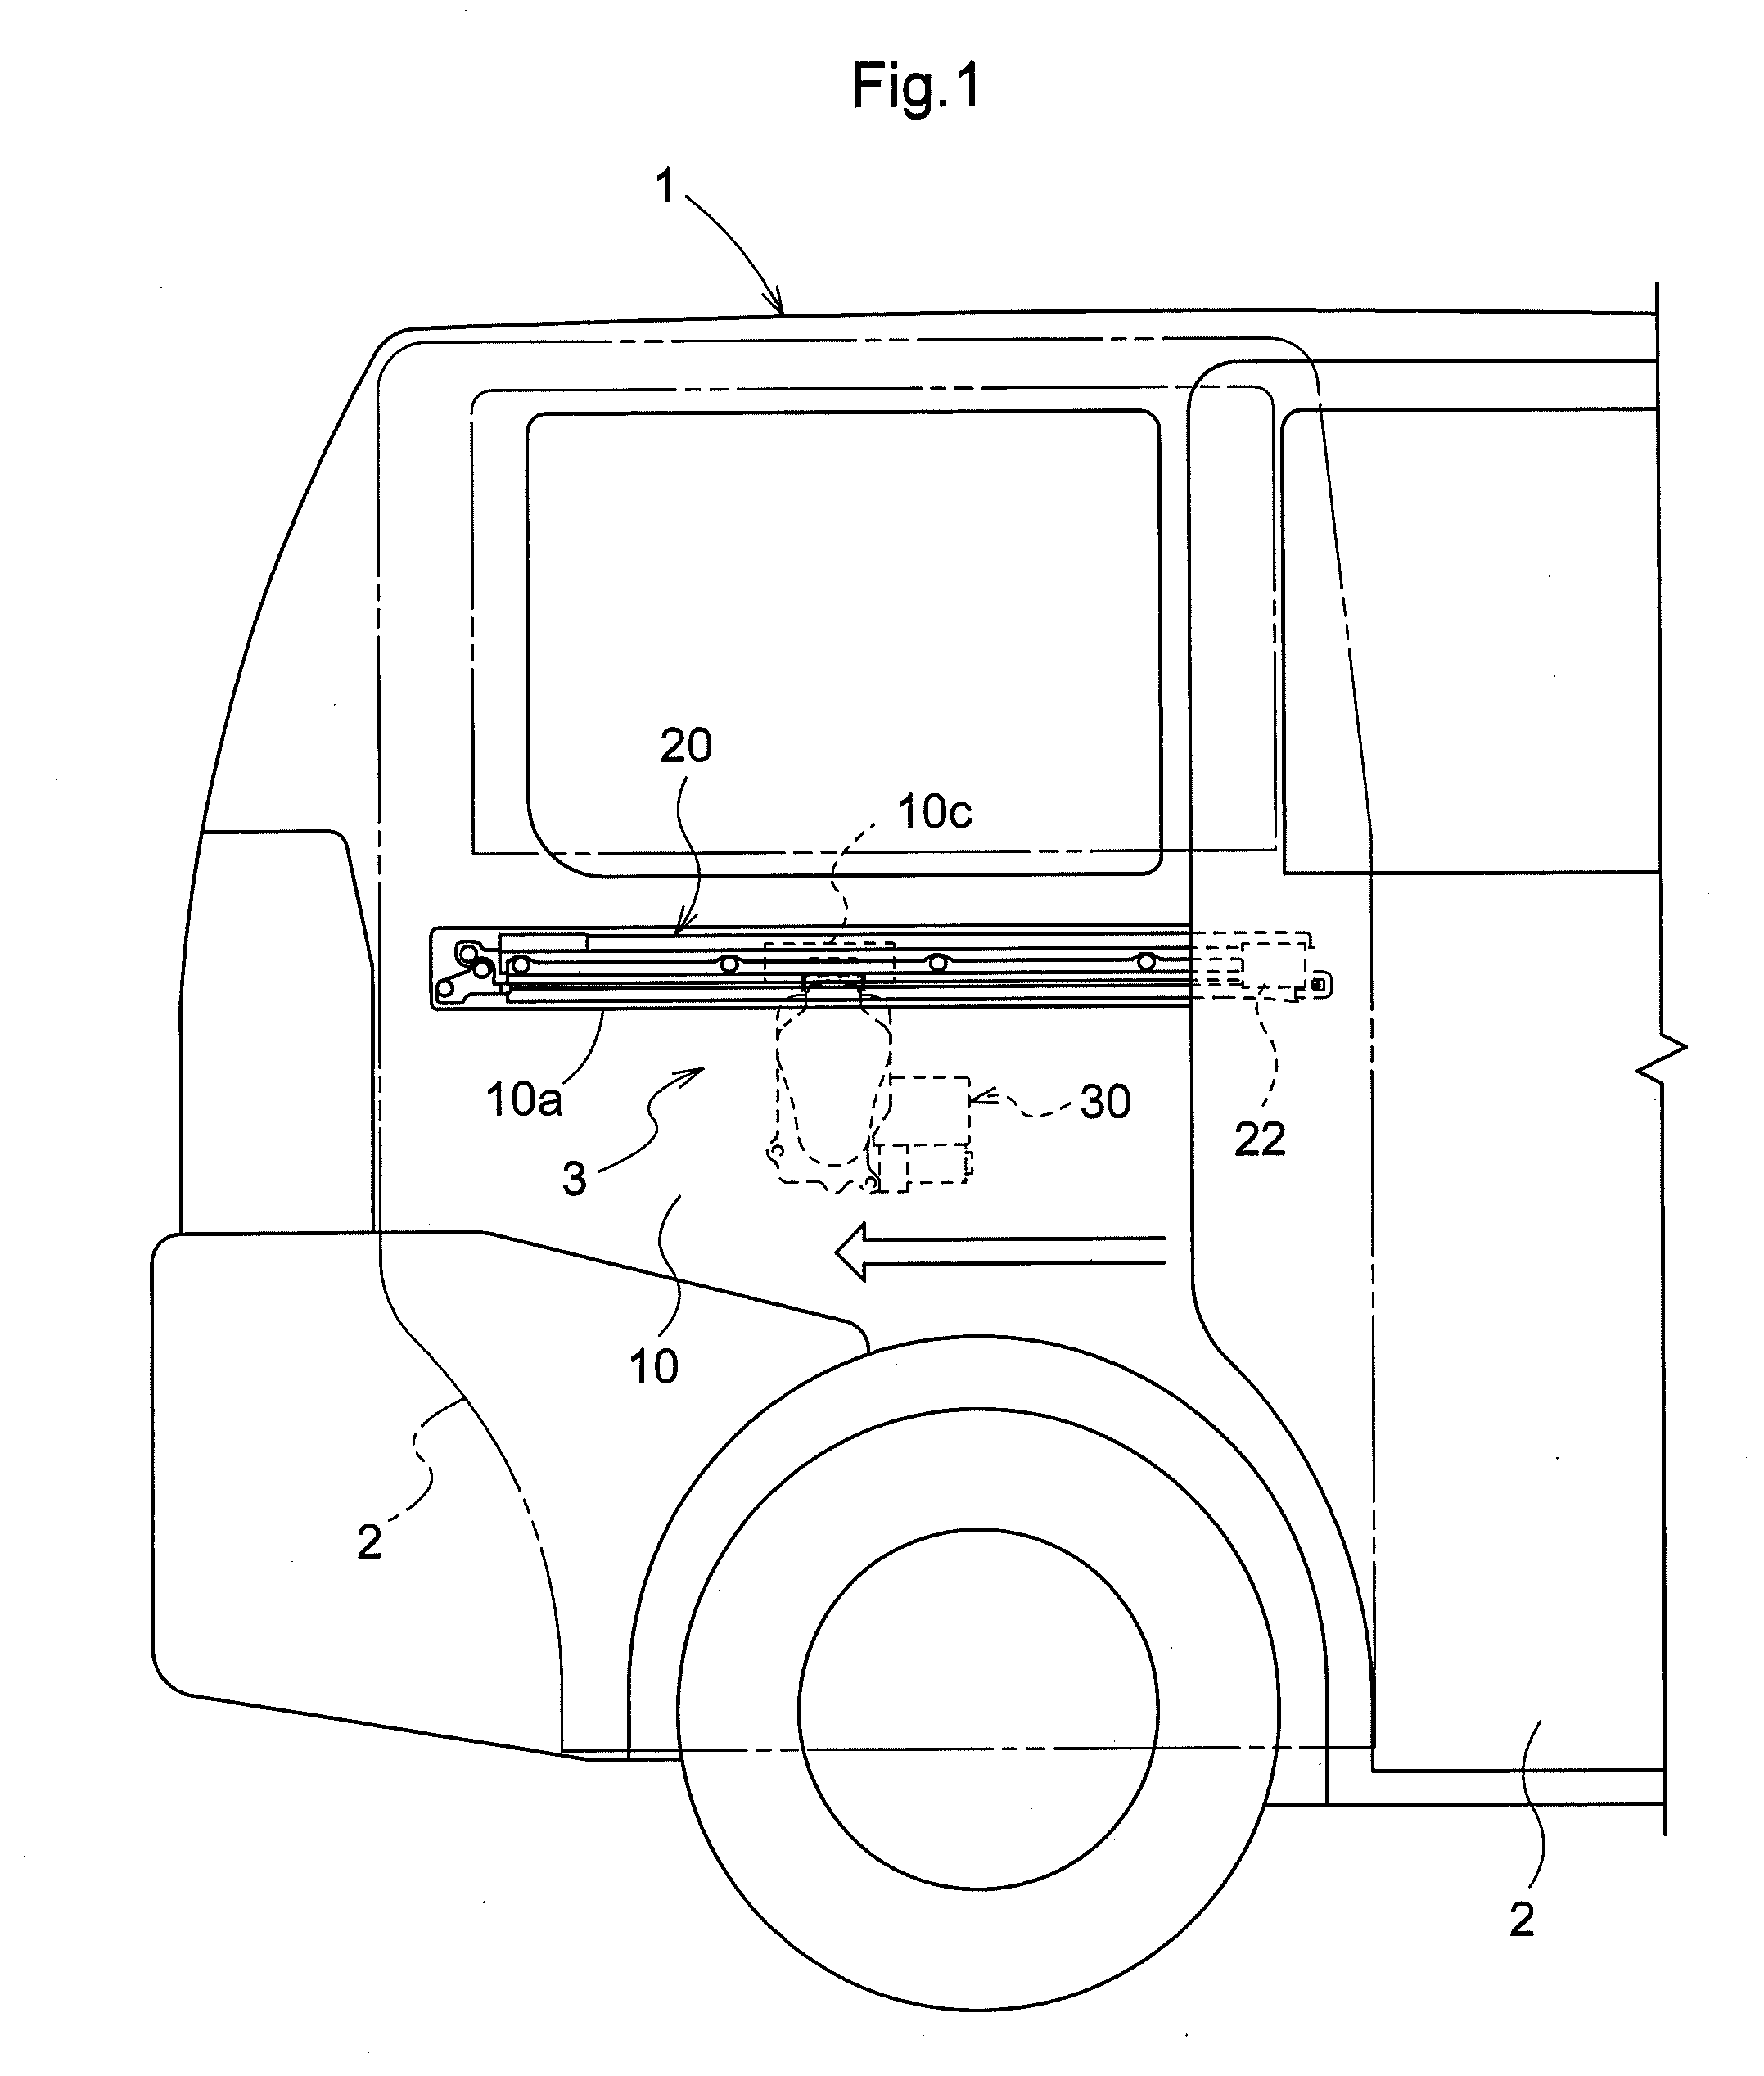 Vehicle door opening/closing apparatus